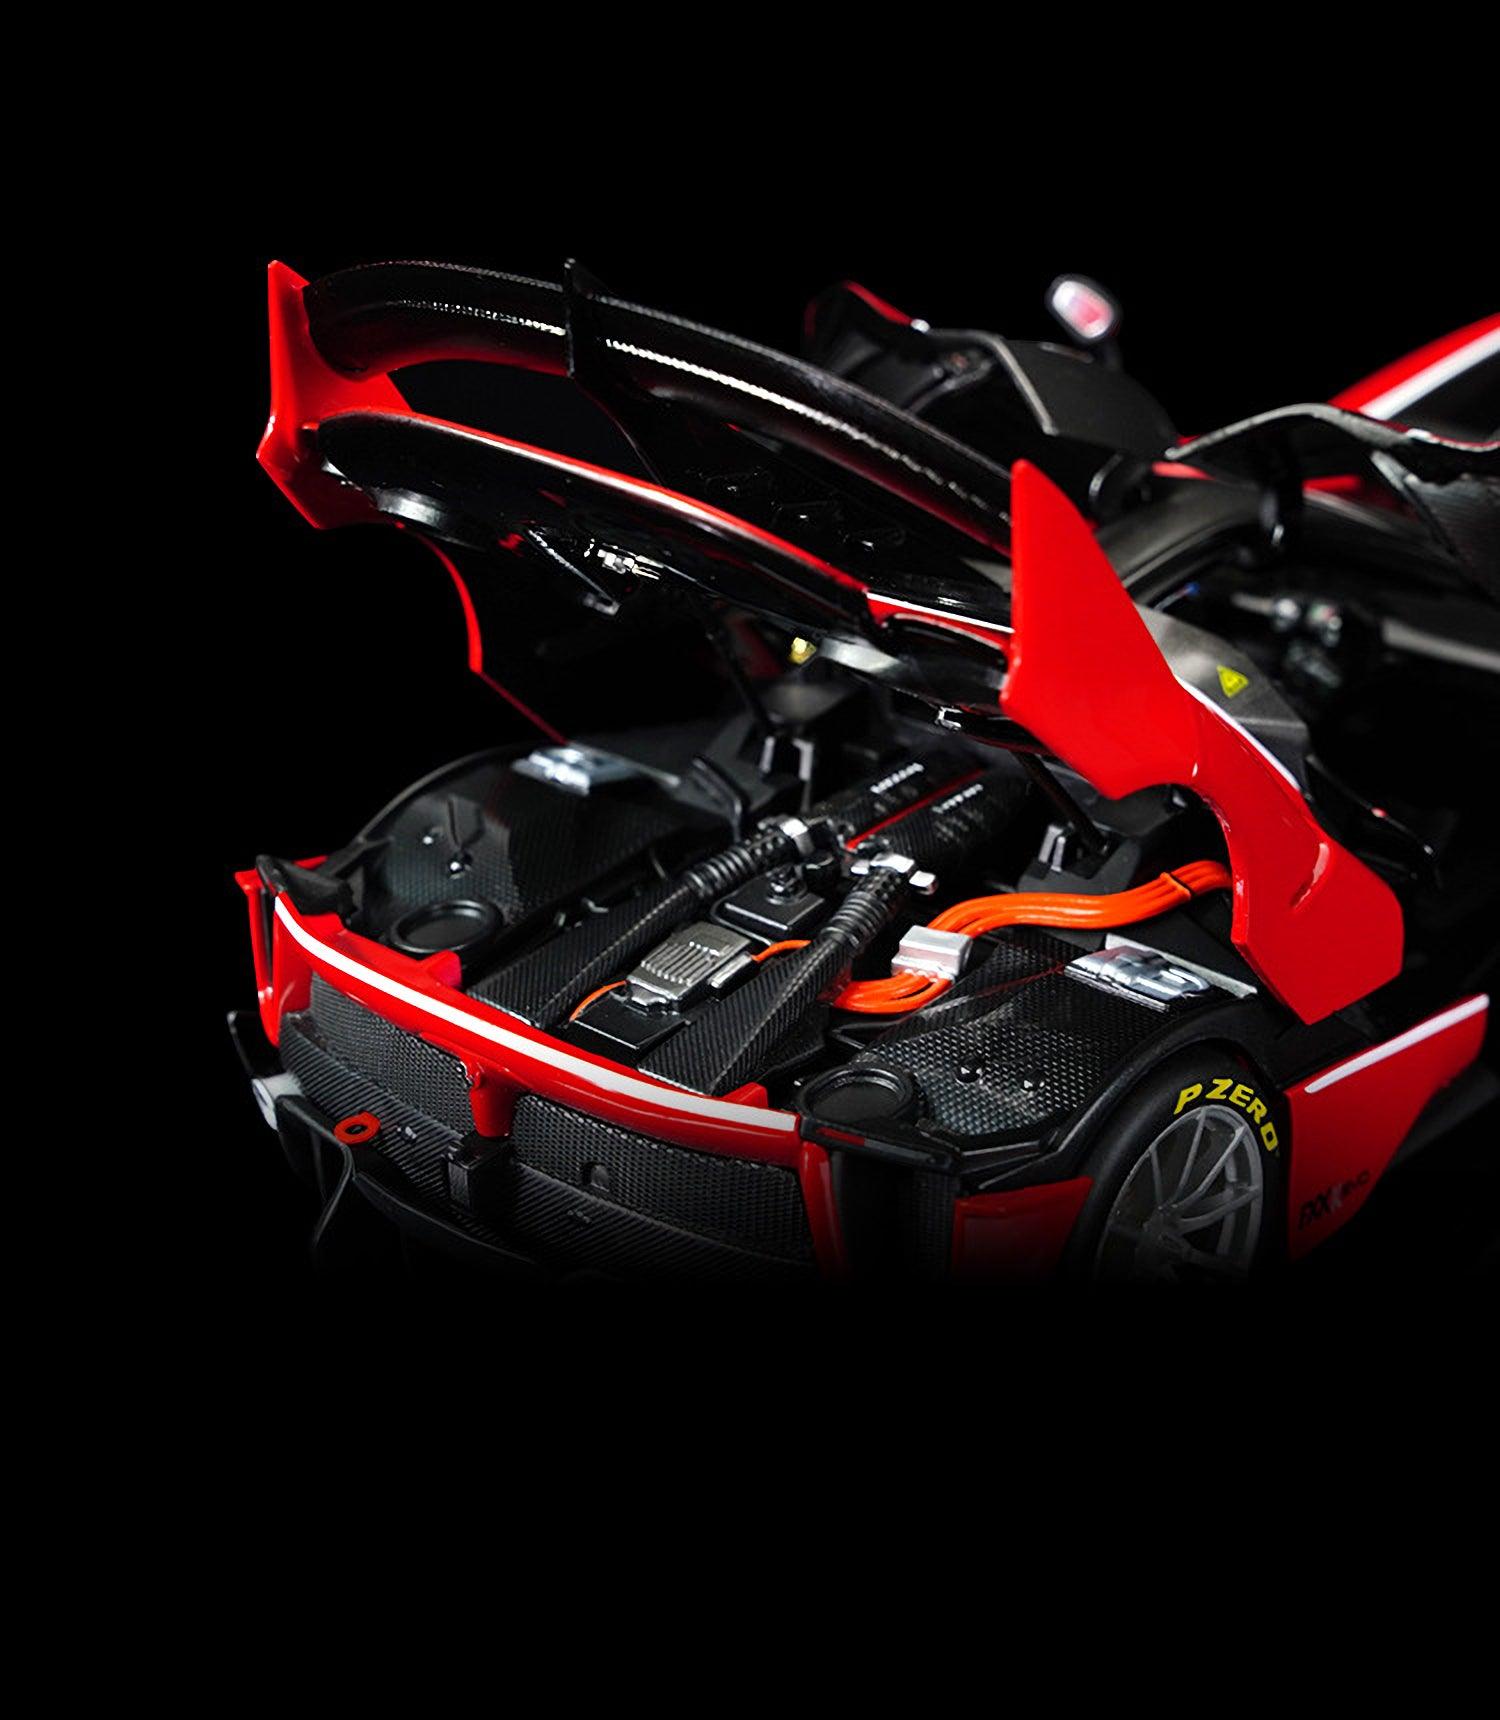 1:18 Scale Ferrari FxxK Genuine Authorization Alloy Die-cast Model Car - PANSEKtoy